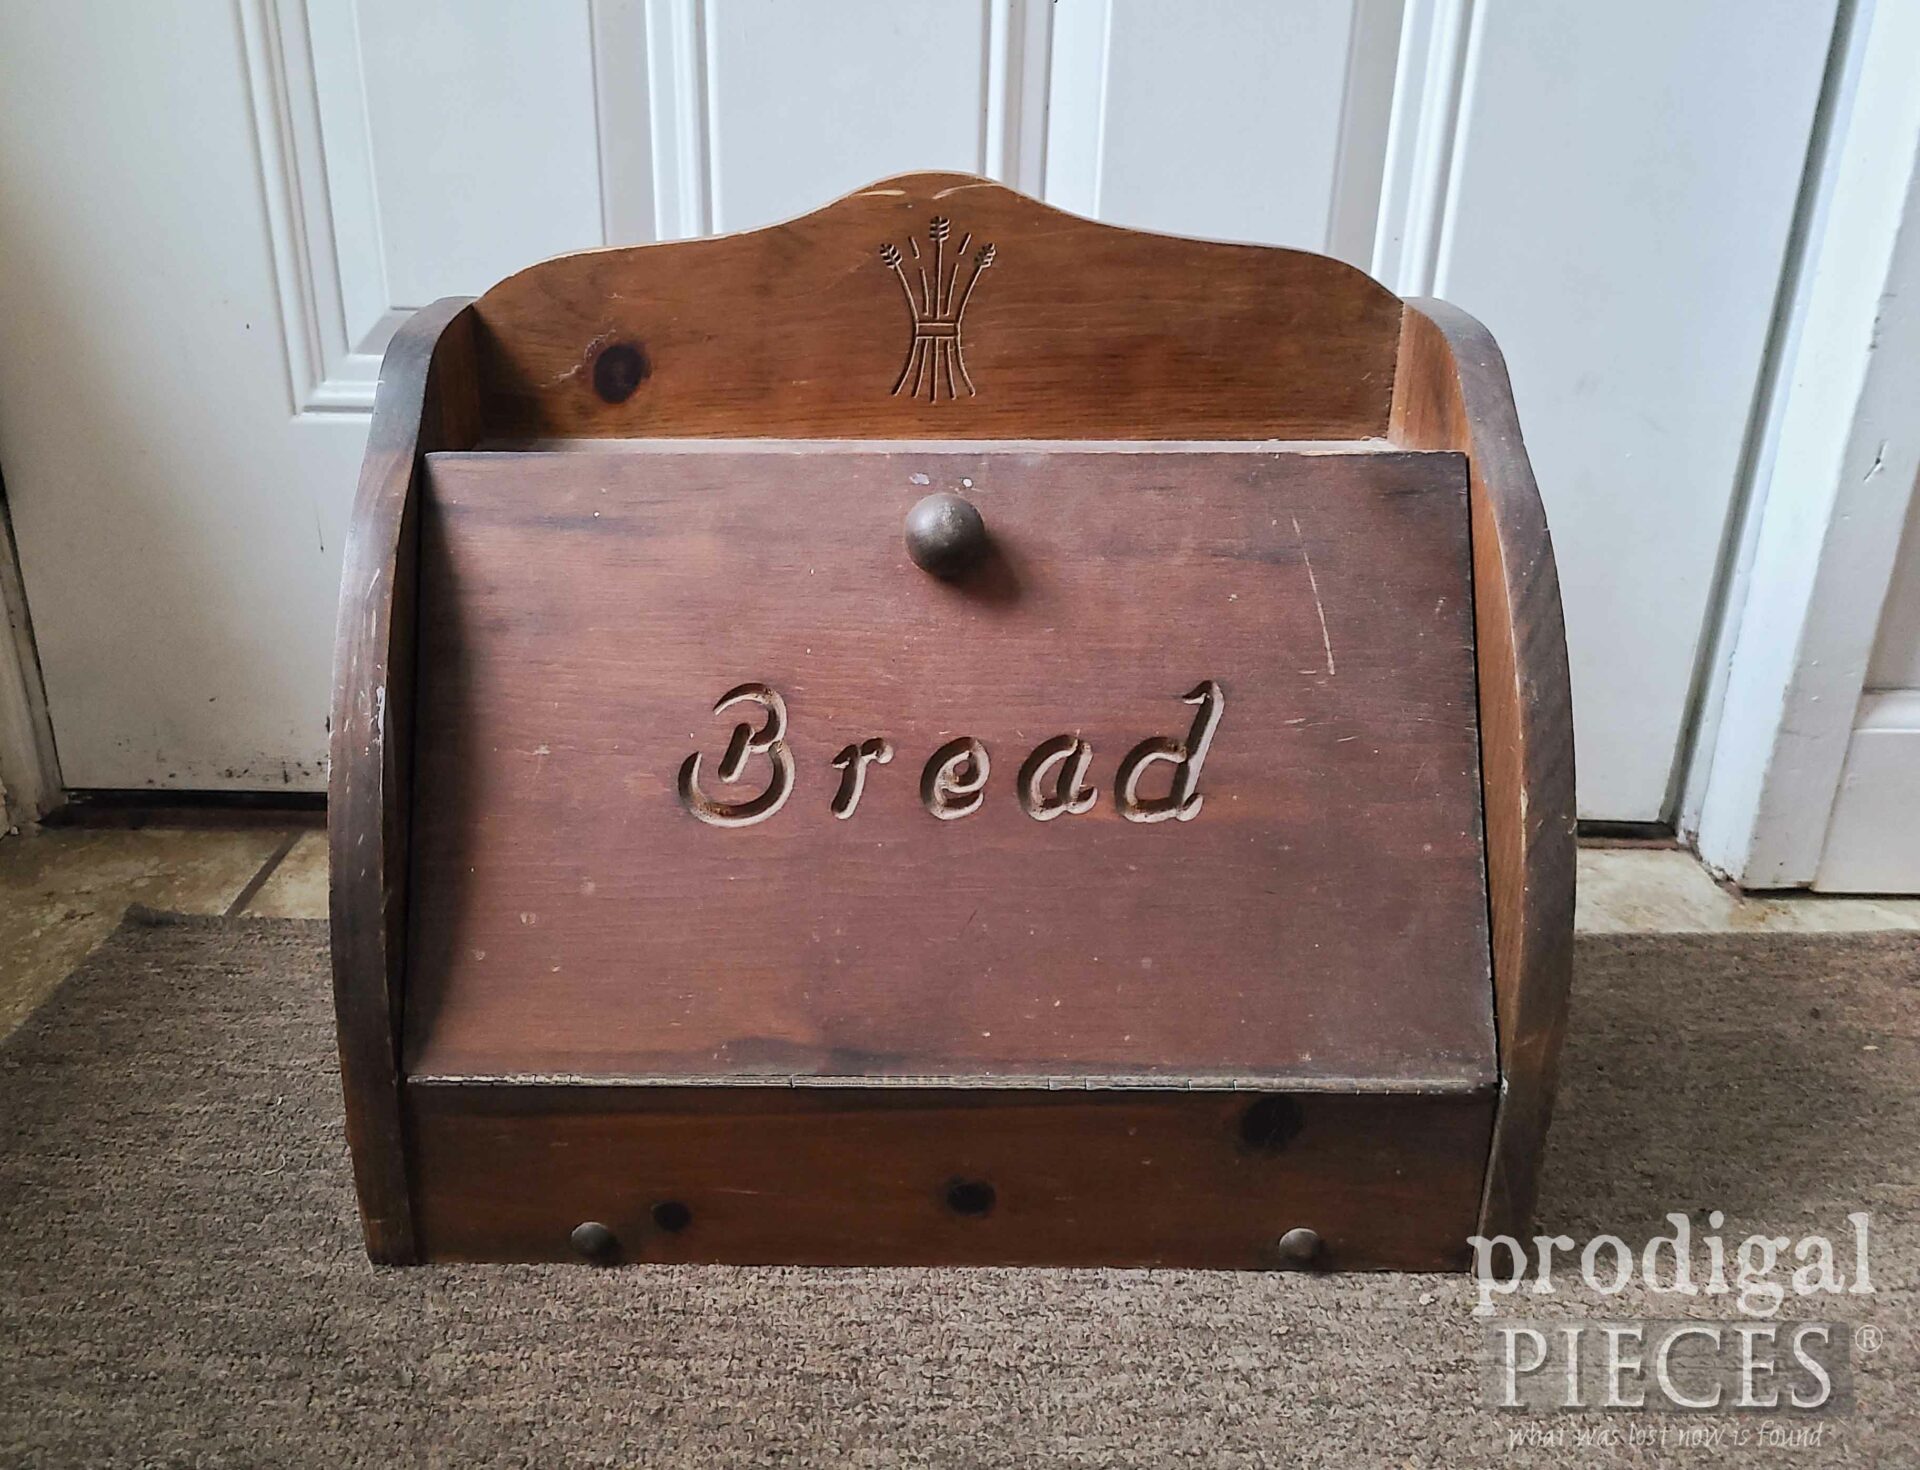 Vintage Bread Box Before Makeover | prodigalpieces.com #prodigalpieces